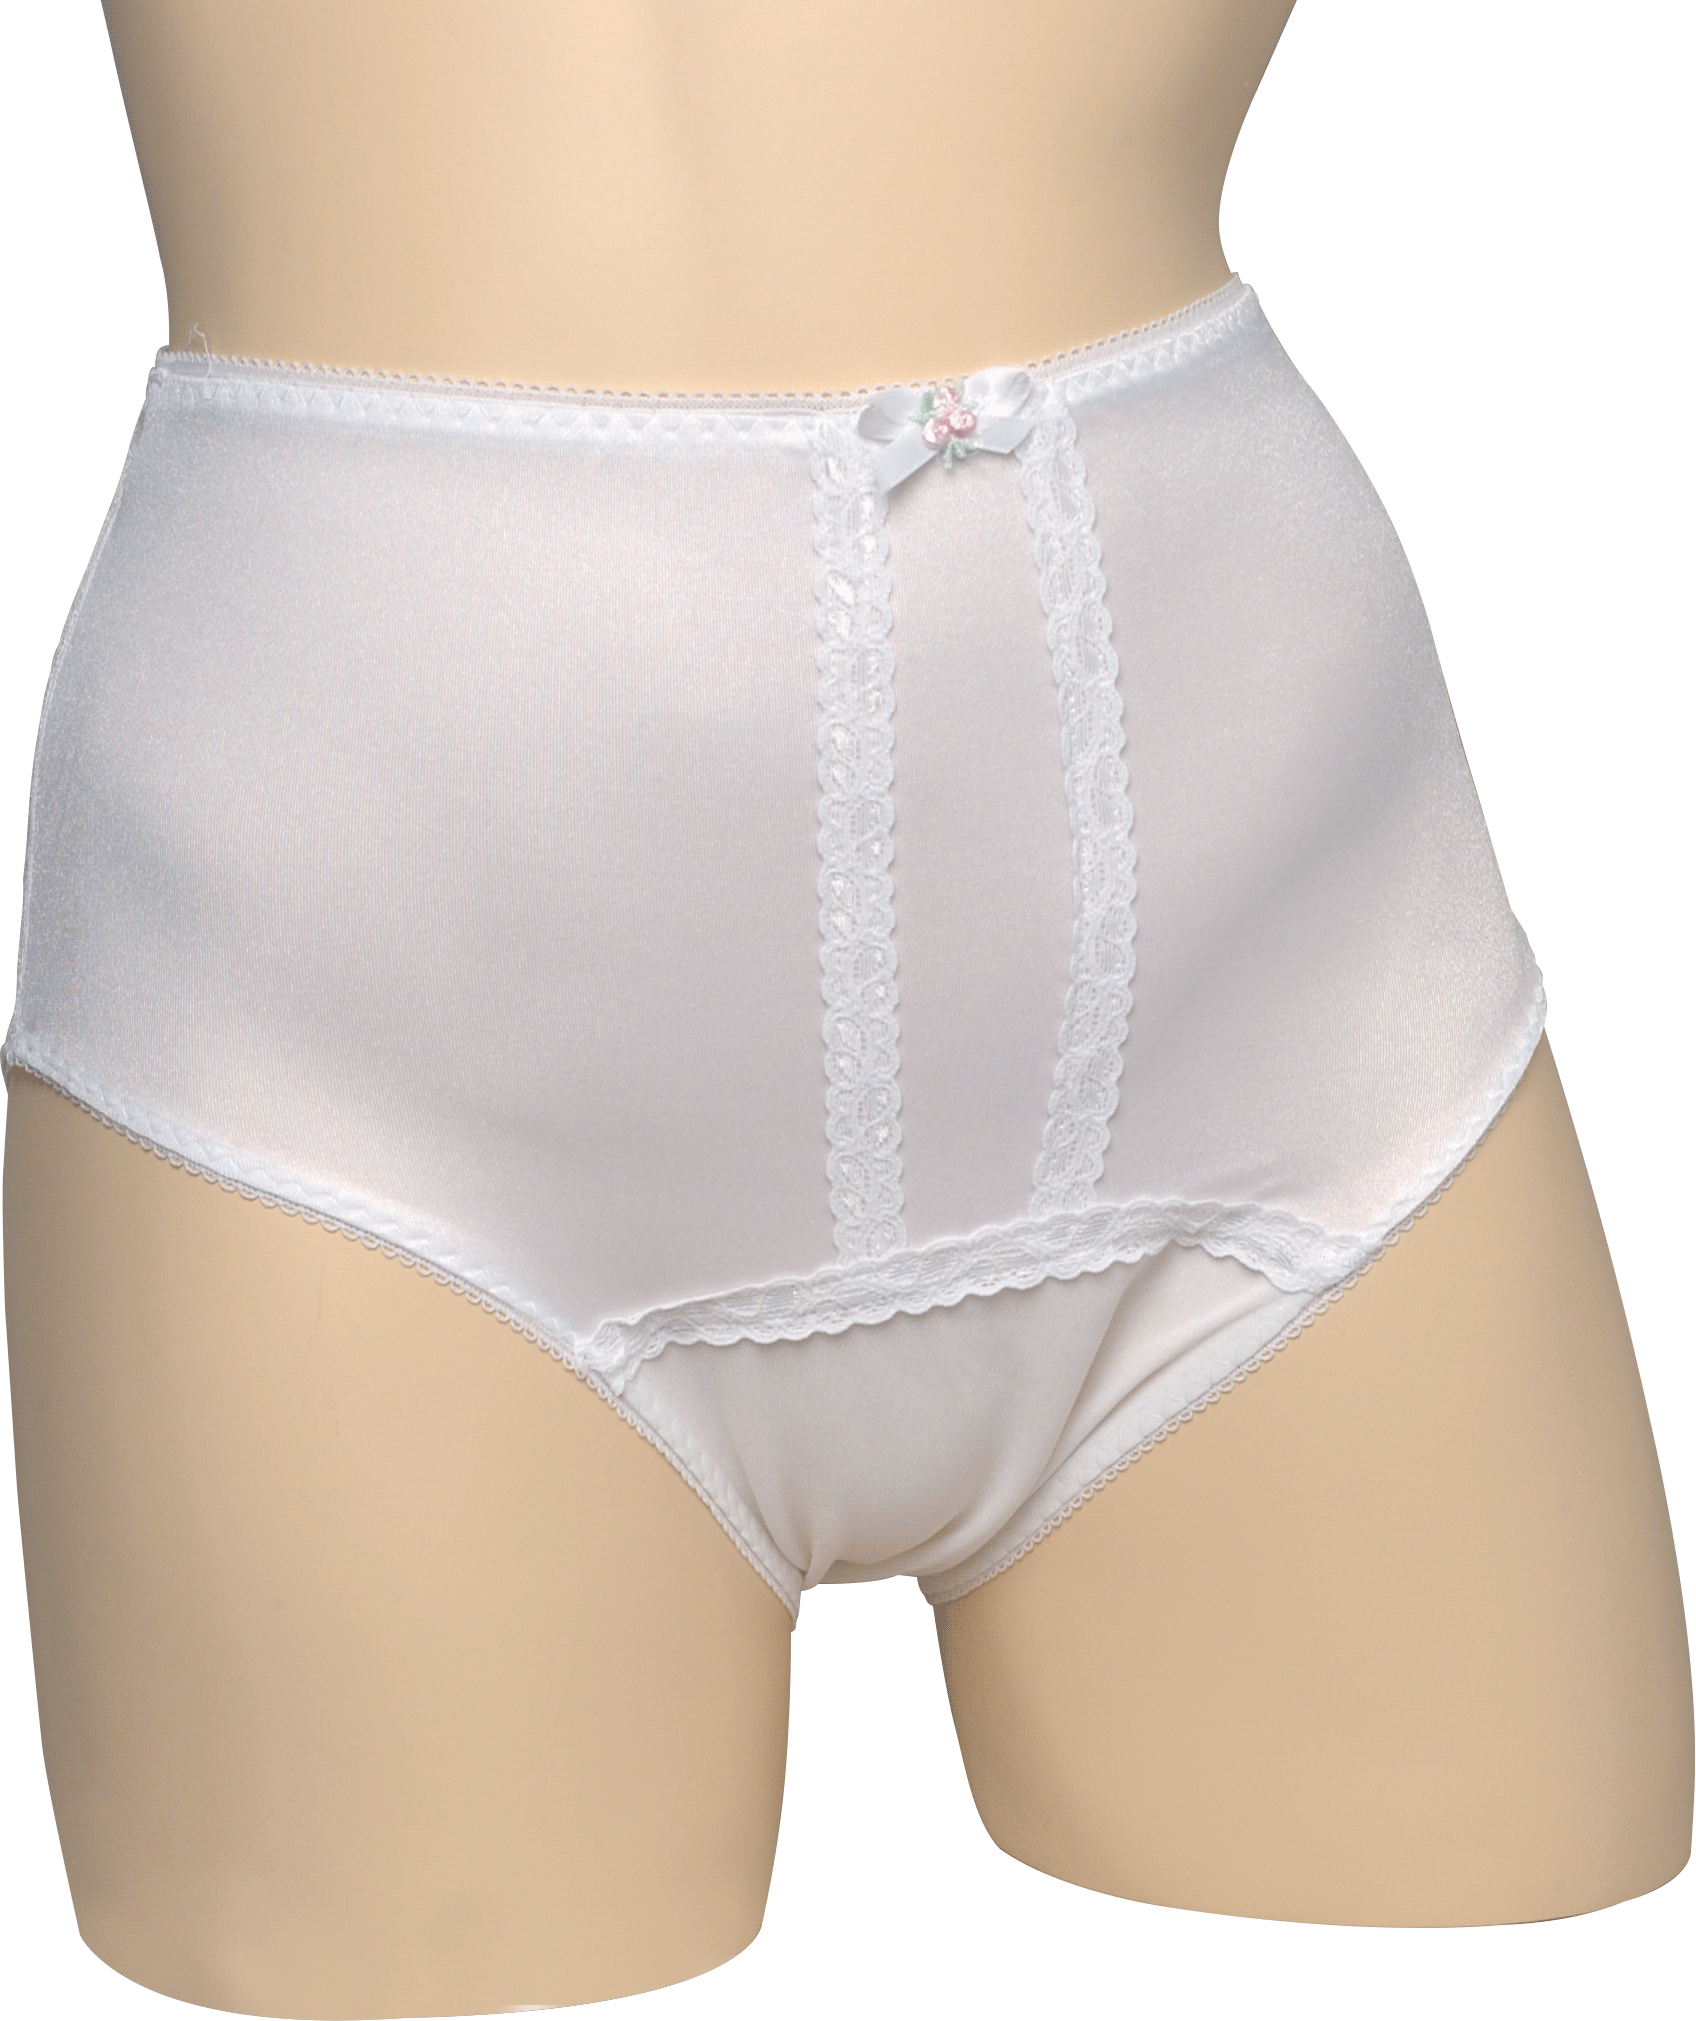 EA/1 - Salk Premier Plus&trade; Ladies Panty Medium, 33" to 37" Waist Size, Nylon/Lycra Stretch Fabric - Best Buy Medical Supplies